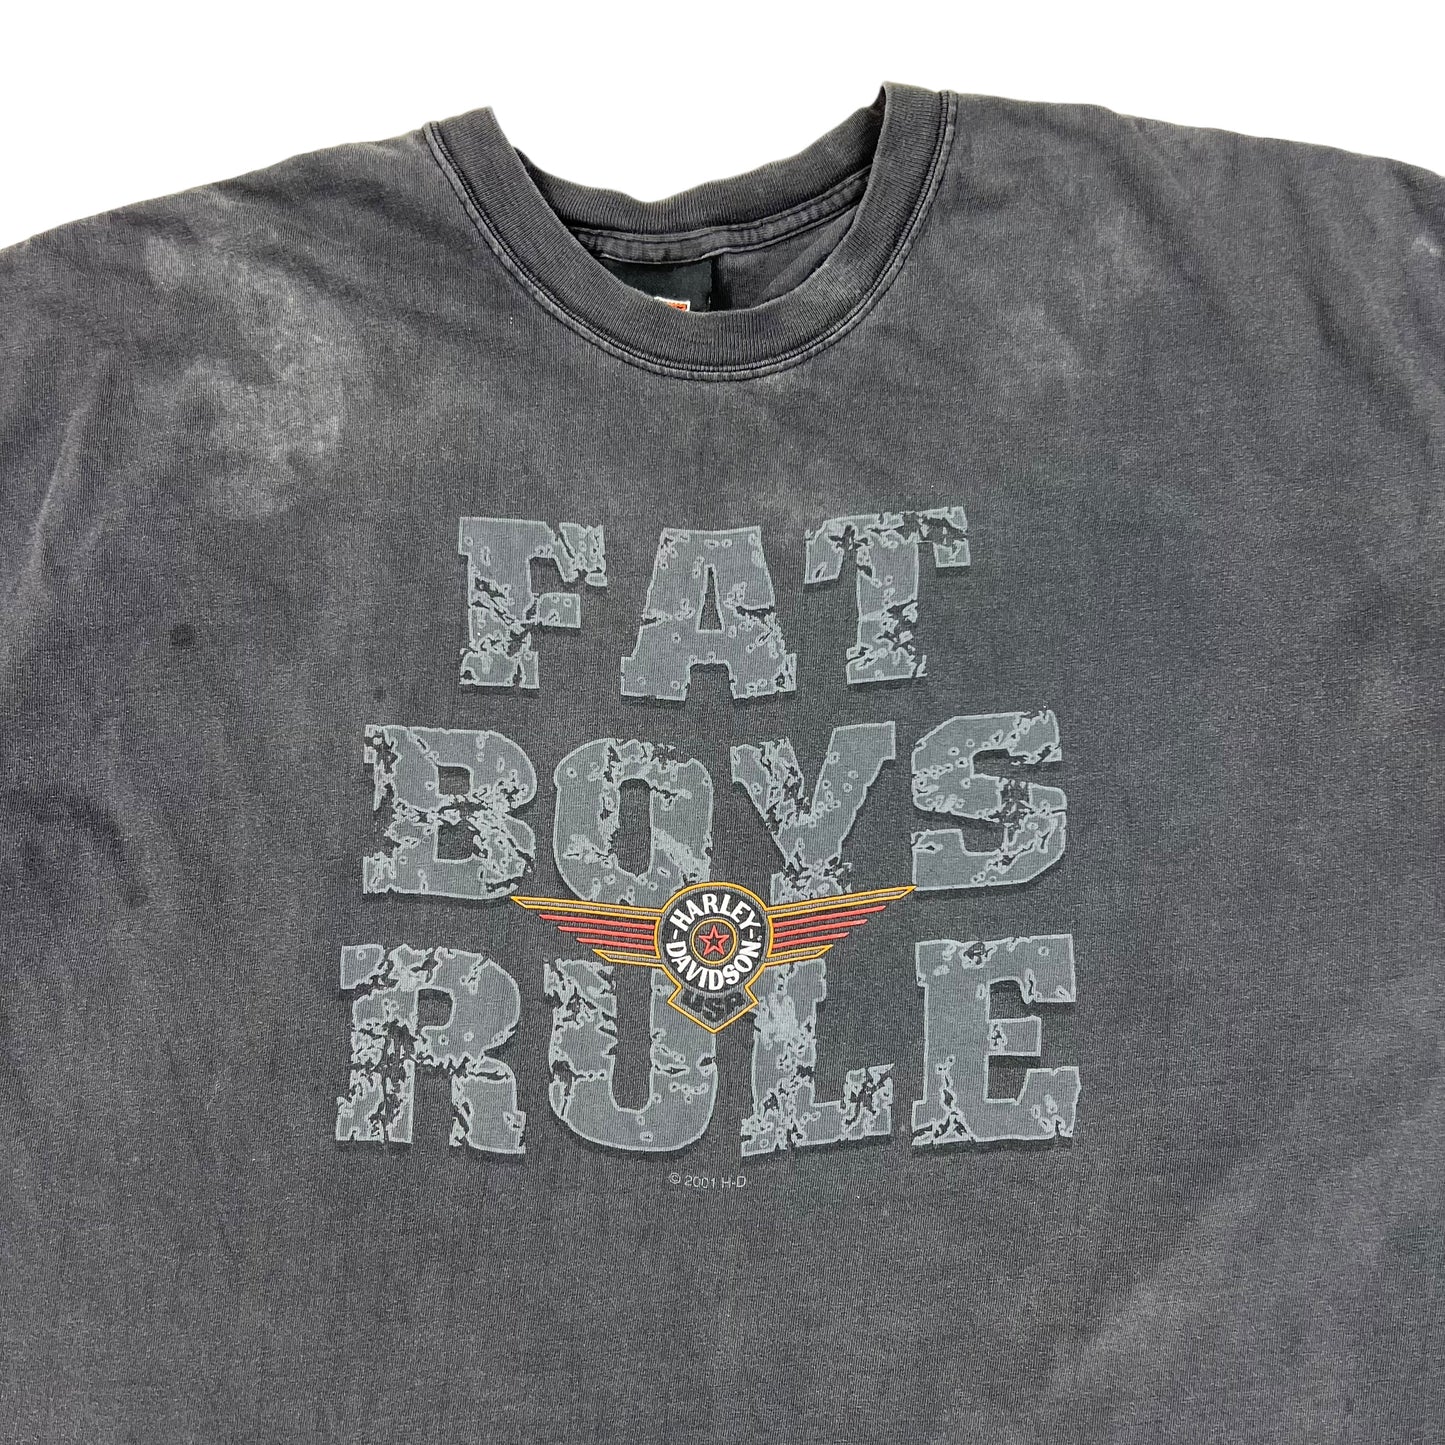 Vintage 2001 Harley Davidson Motorcycles Fat Boys Rule faded tee (XL)